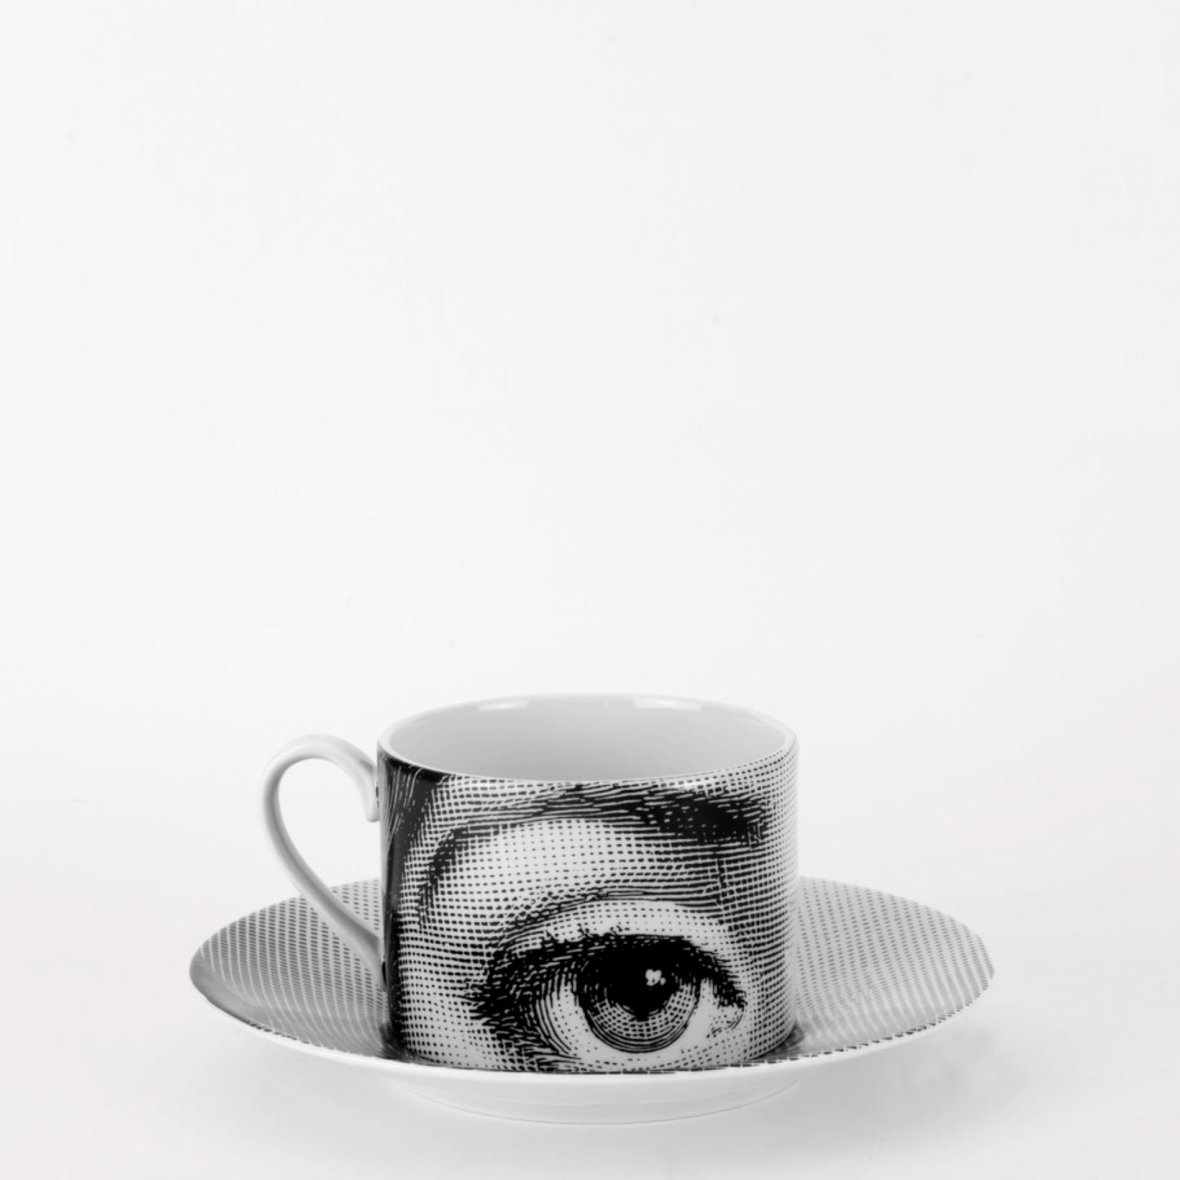 tea-cup-tema-e-variazioni-n-1-black-white-2